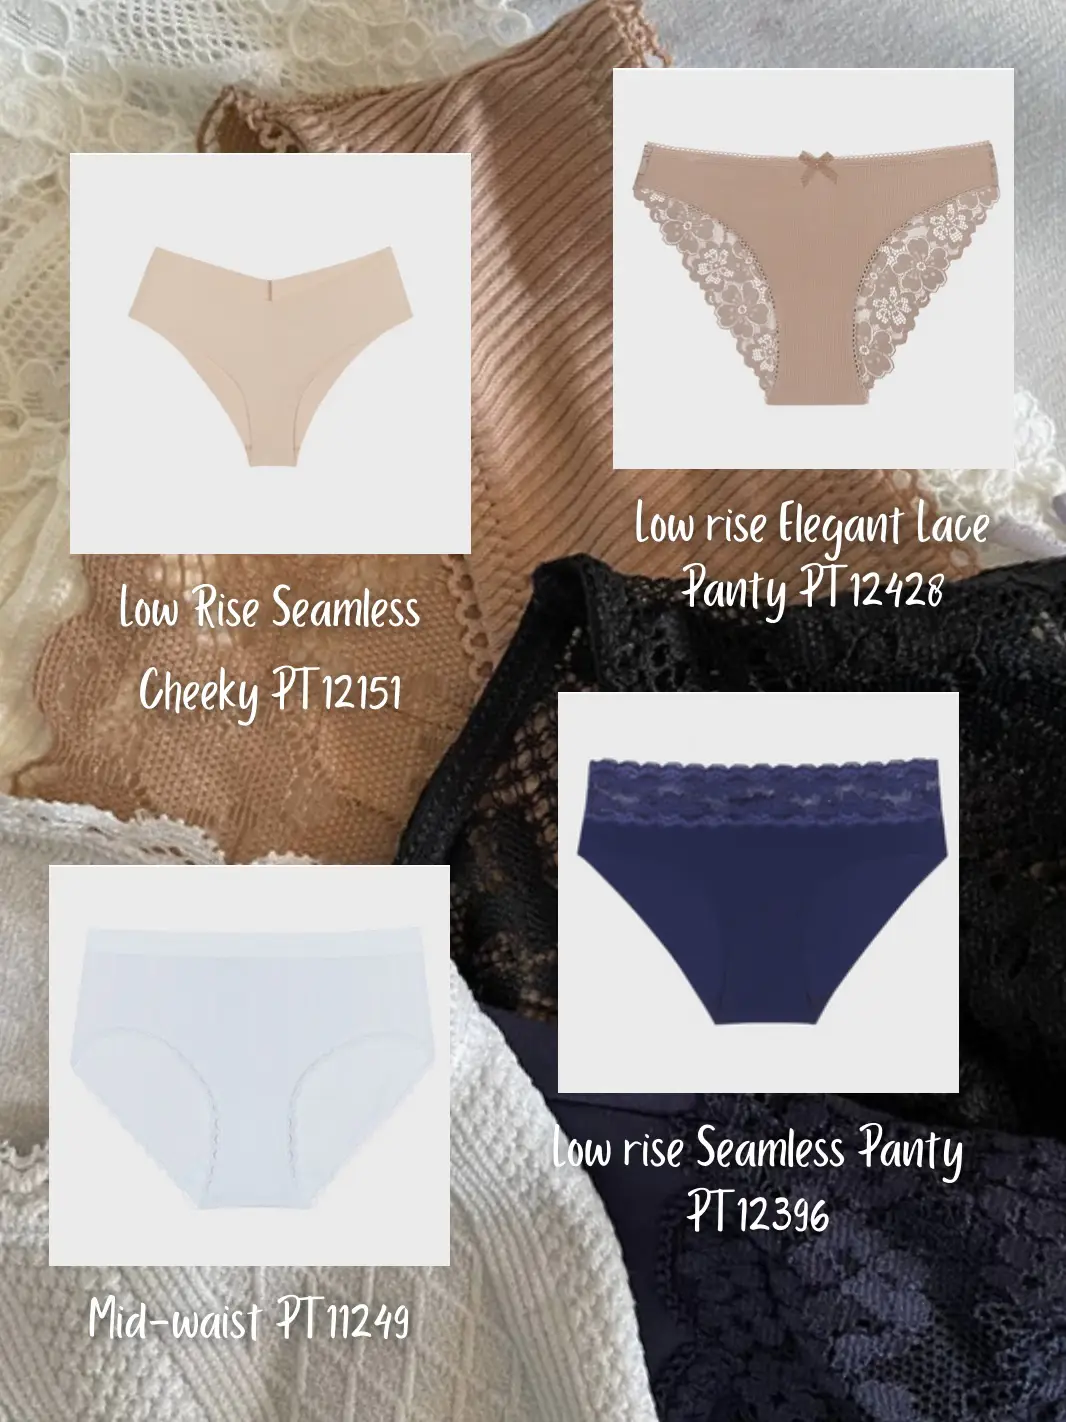 Buy N-Gal Women's Erotic Lace See Through Mid Waist Underwear Lingerie  Knickers Brief Panty - Blue Online